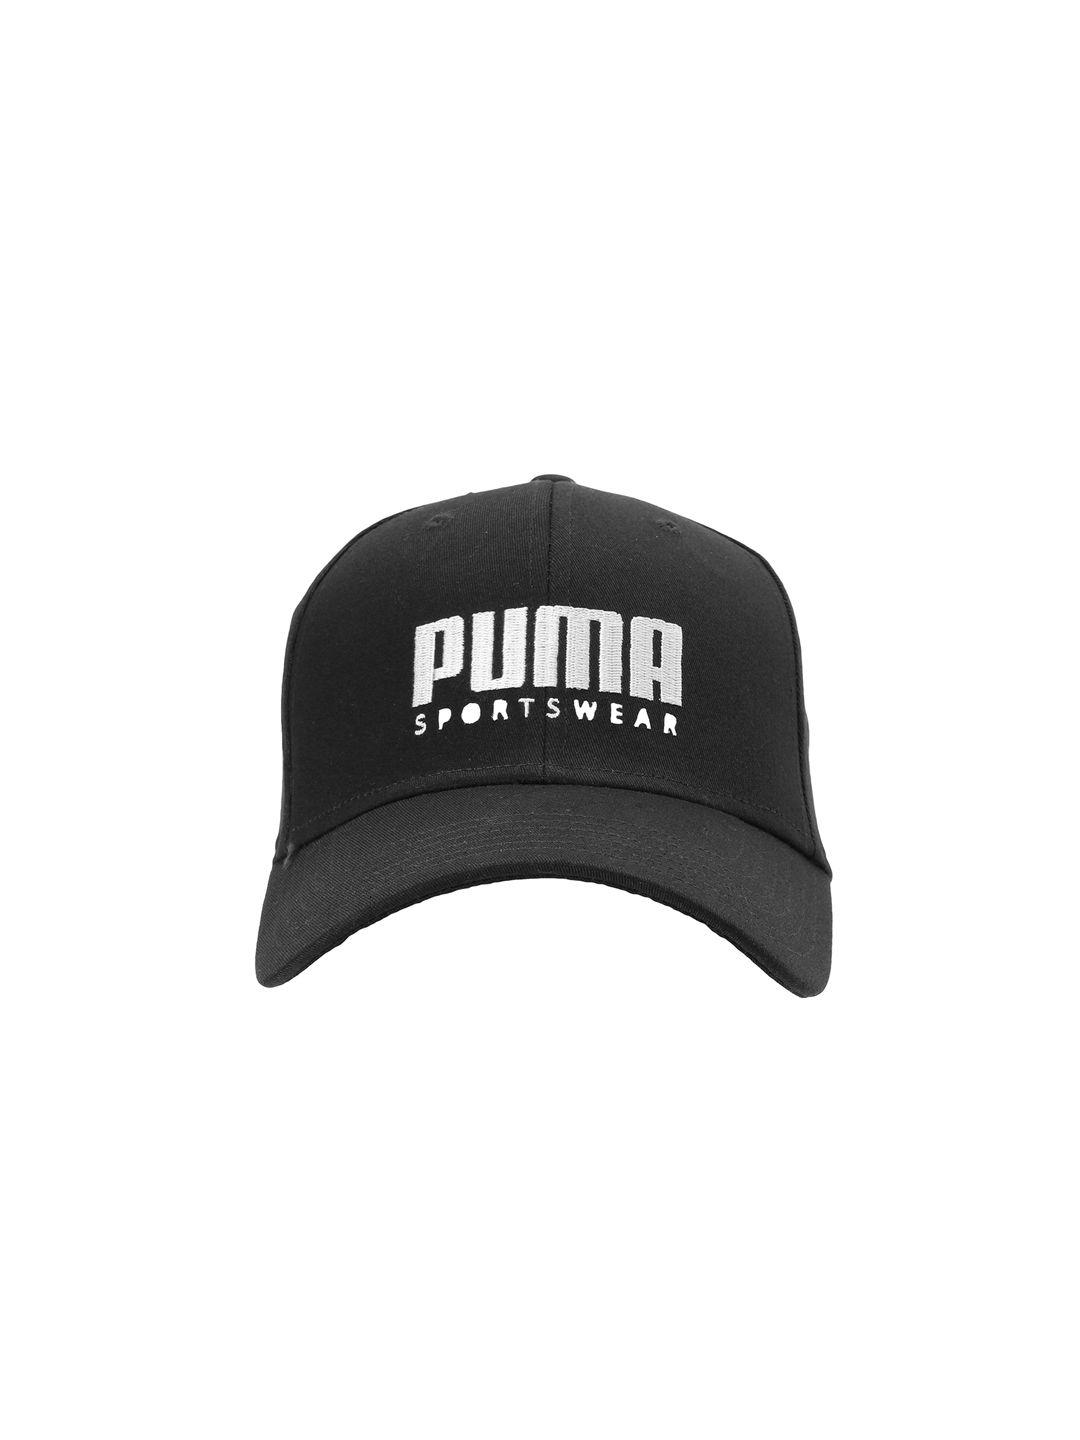 puma unisex black & white solid stretchfit baseball cap